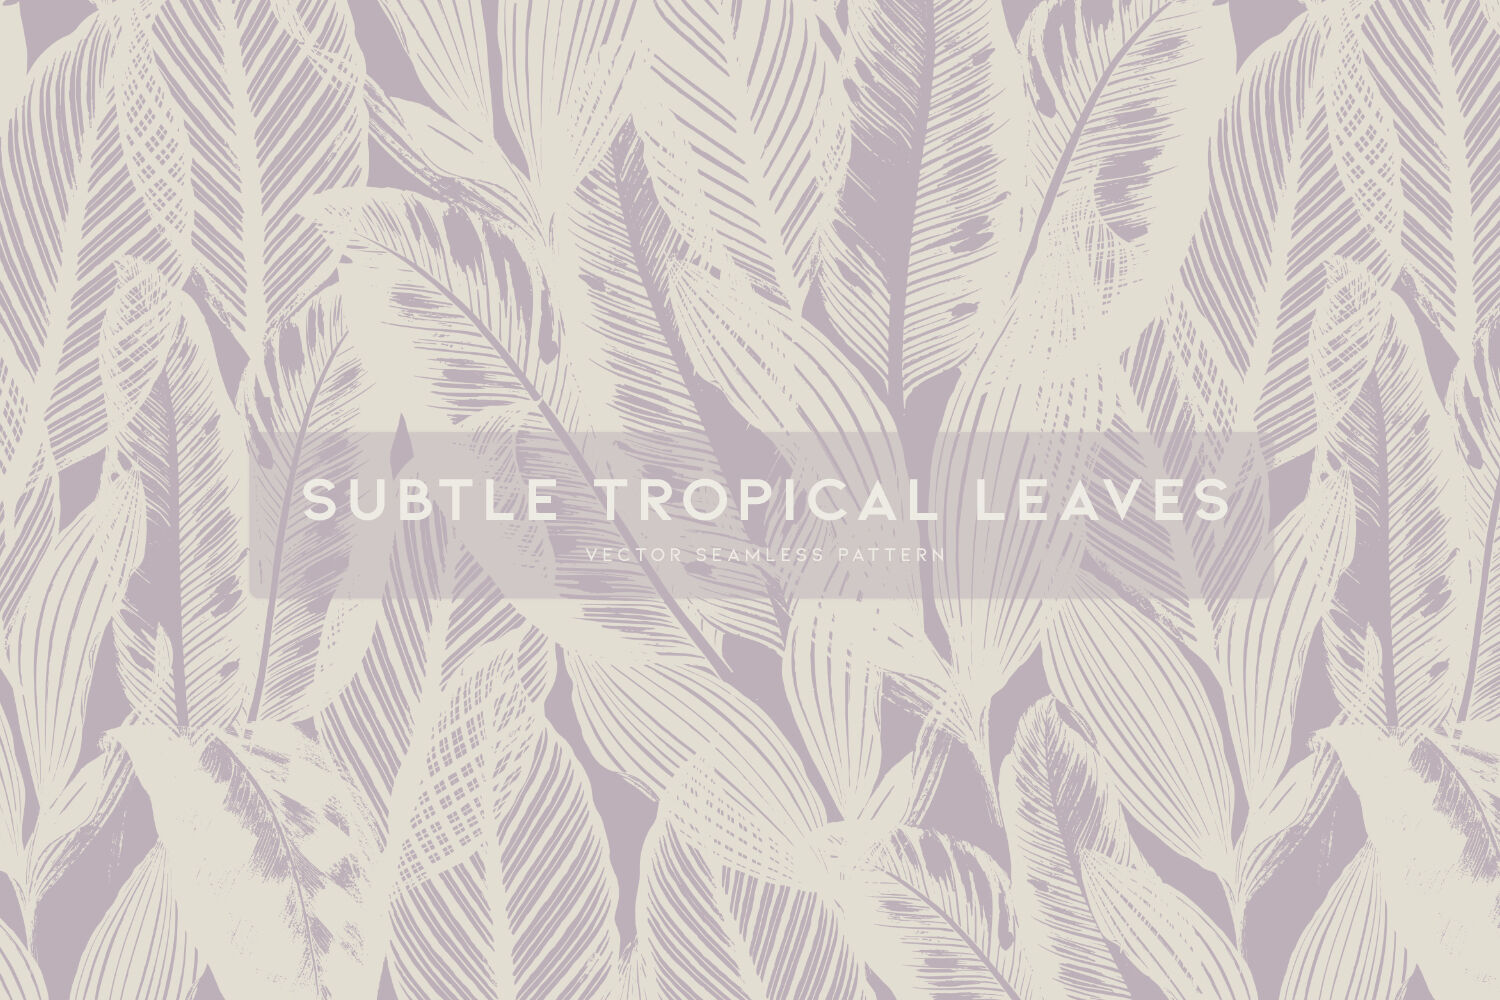 Subtle Tropical Leaves By MalyskaStudio | TheHungryJPEG